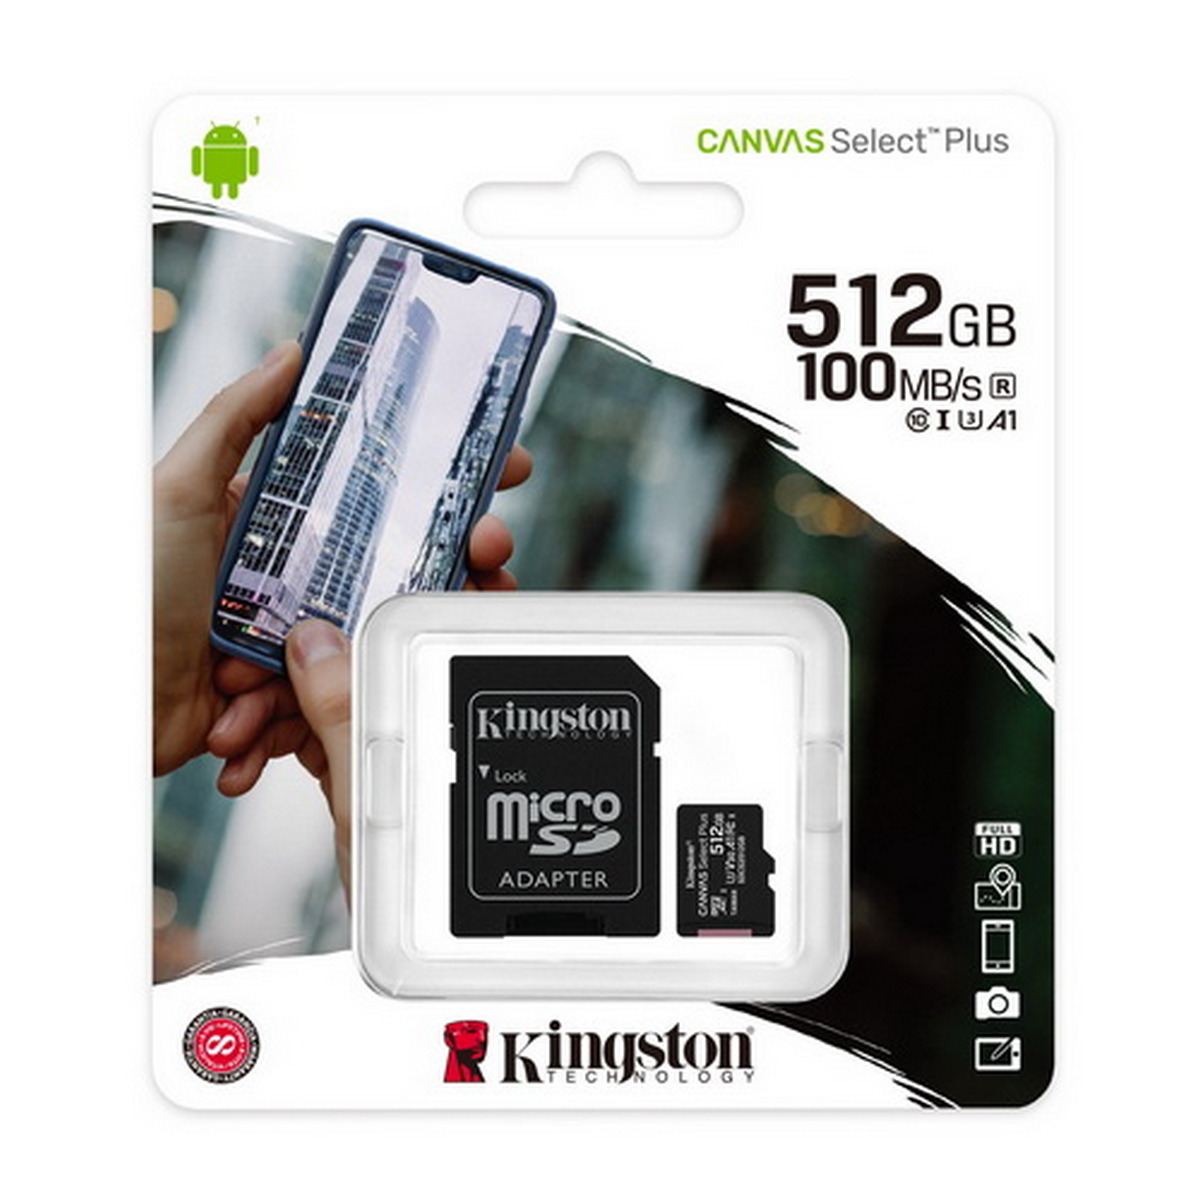 KINGSTON Micro SD Card (512GB) Canvas Select Plus